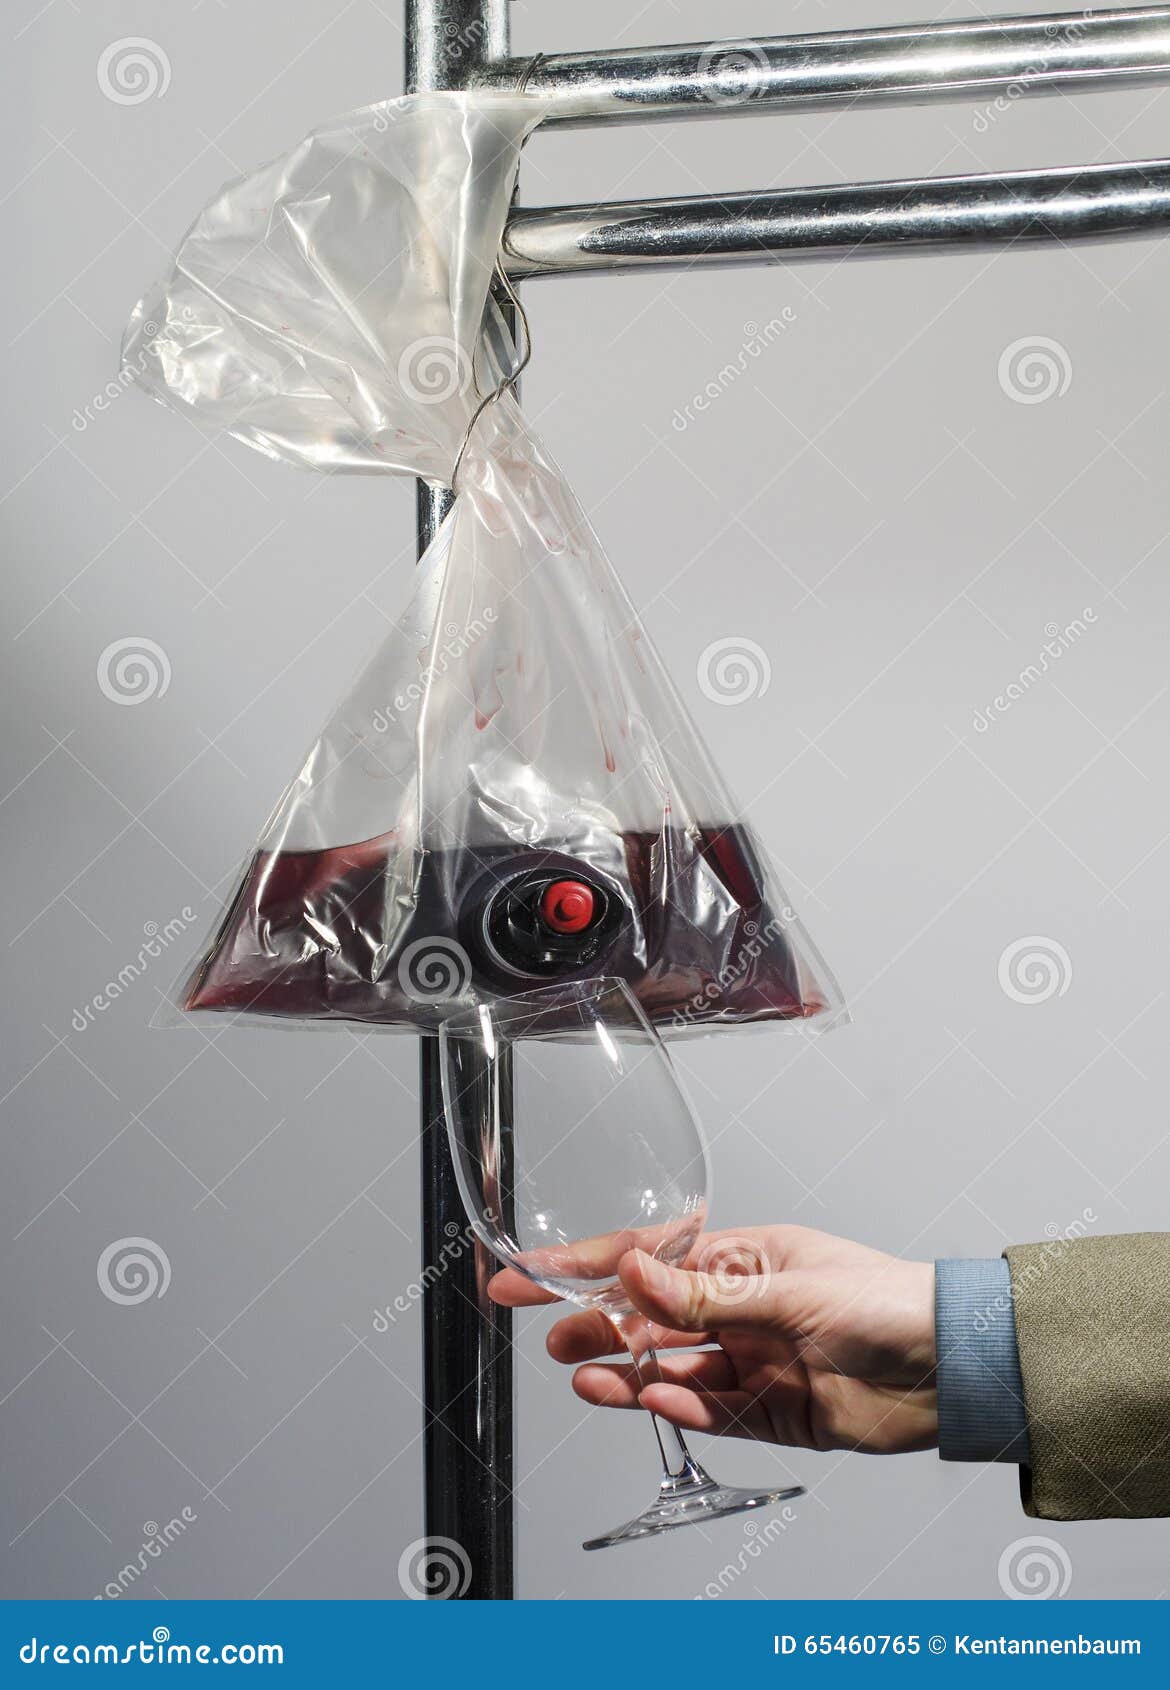 vino-de-consumici%C3%B3n-del-doctor-de-la-bolsa-de-pl%C3%A1stico-65460765.jpg